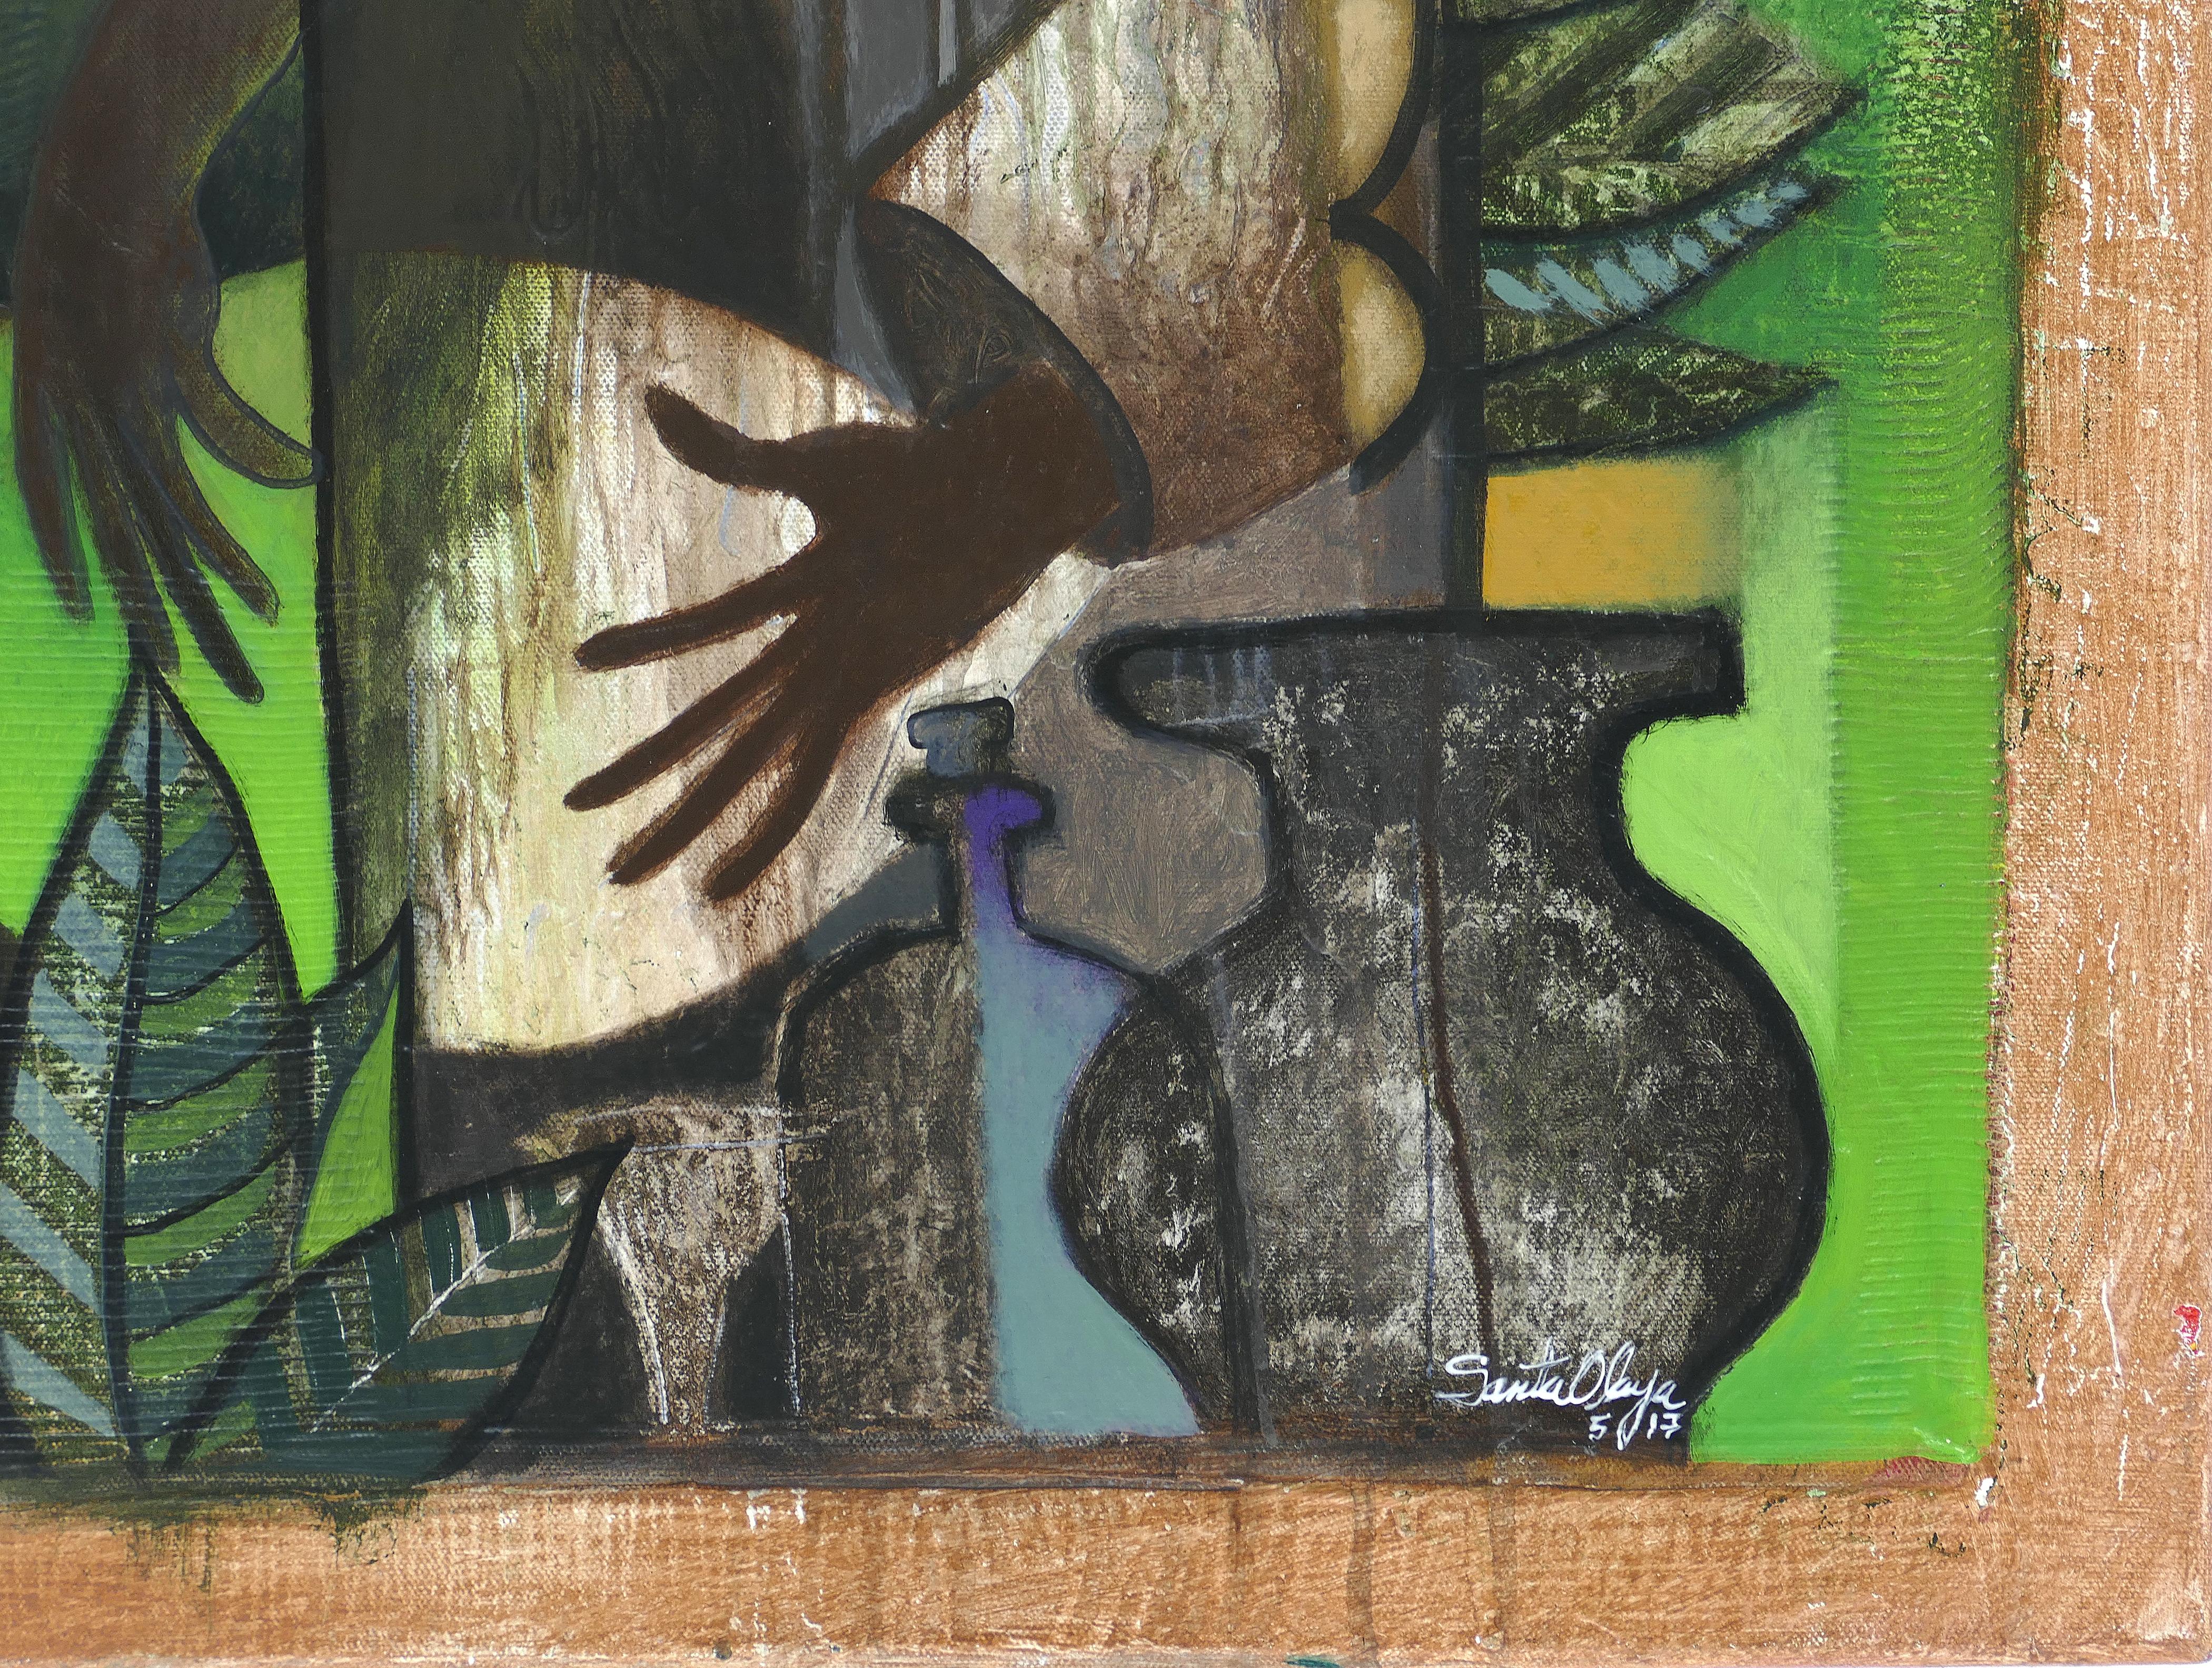 Hiremio Garcia Santaolaya abstract painting, Cuban American artist 

 Offered for sale is an original mixed media abstract figurative acrylic painting on canvas by the Cuban American artist Hiremio Garcia Santaolaya titled 